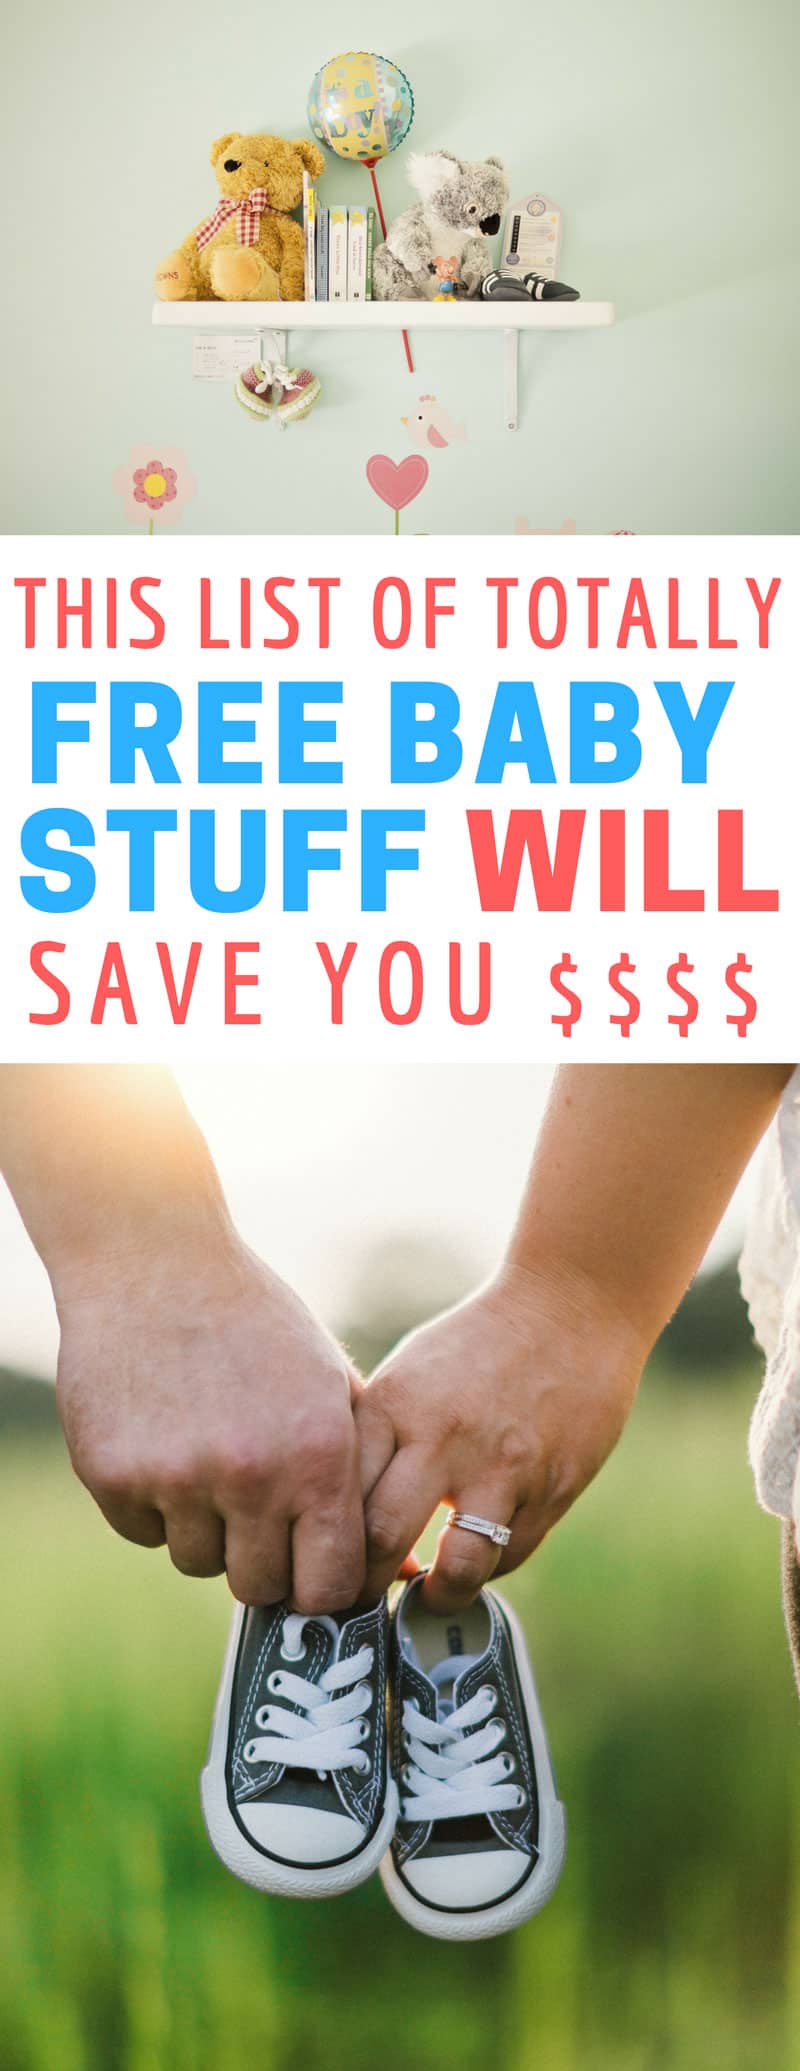 Free Stuff For Pregnant Moms 117